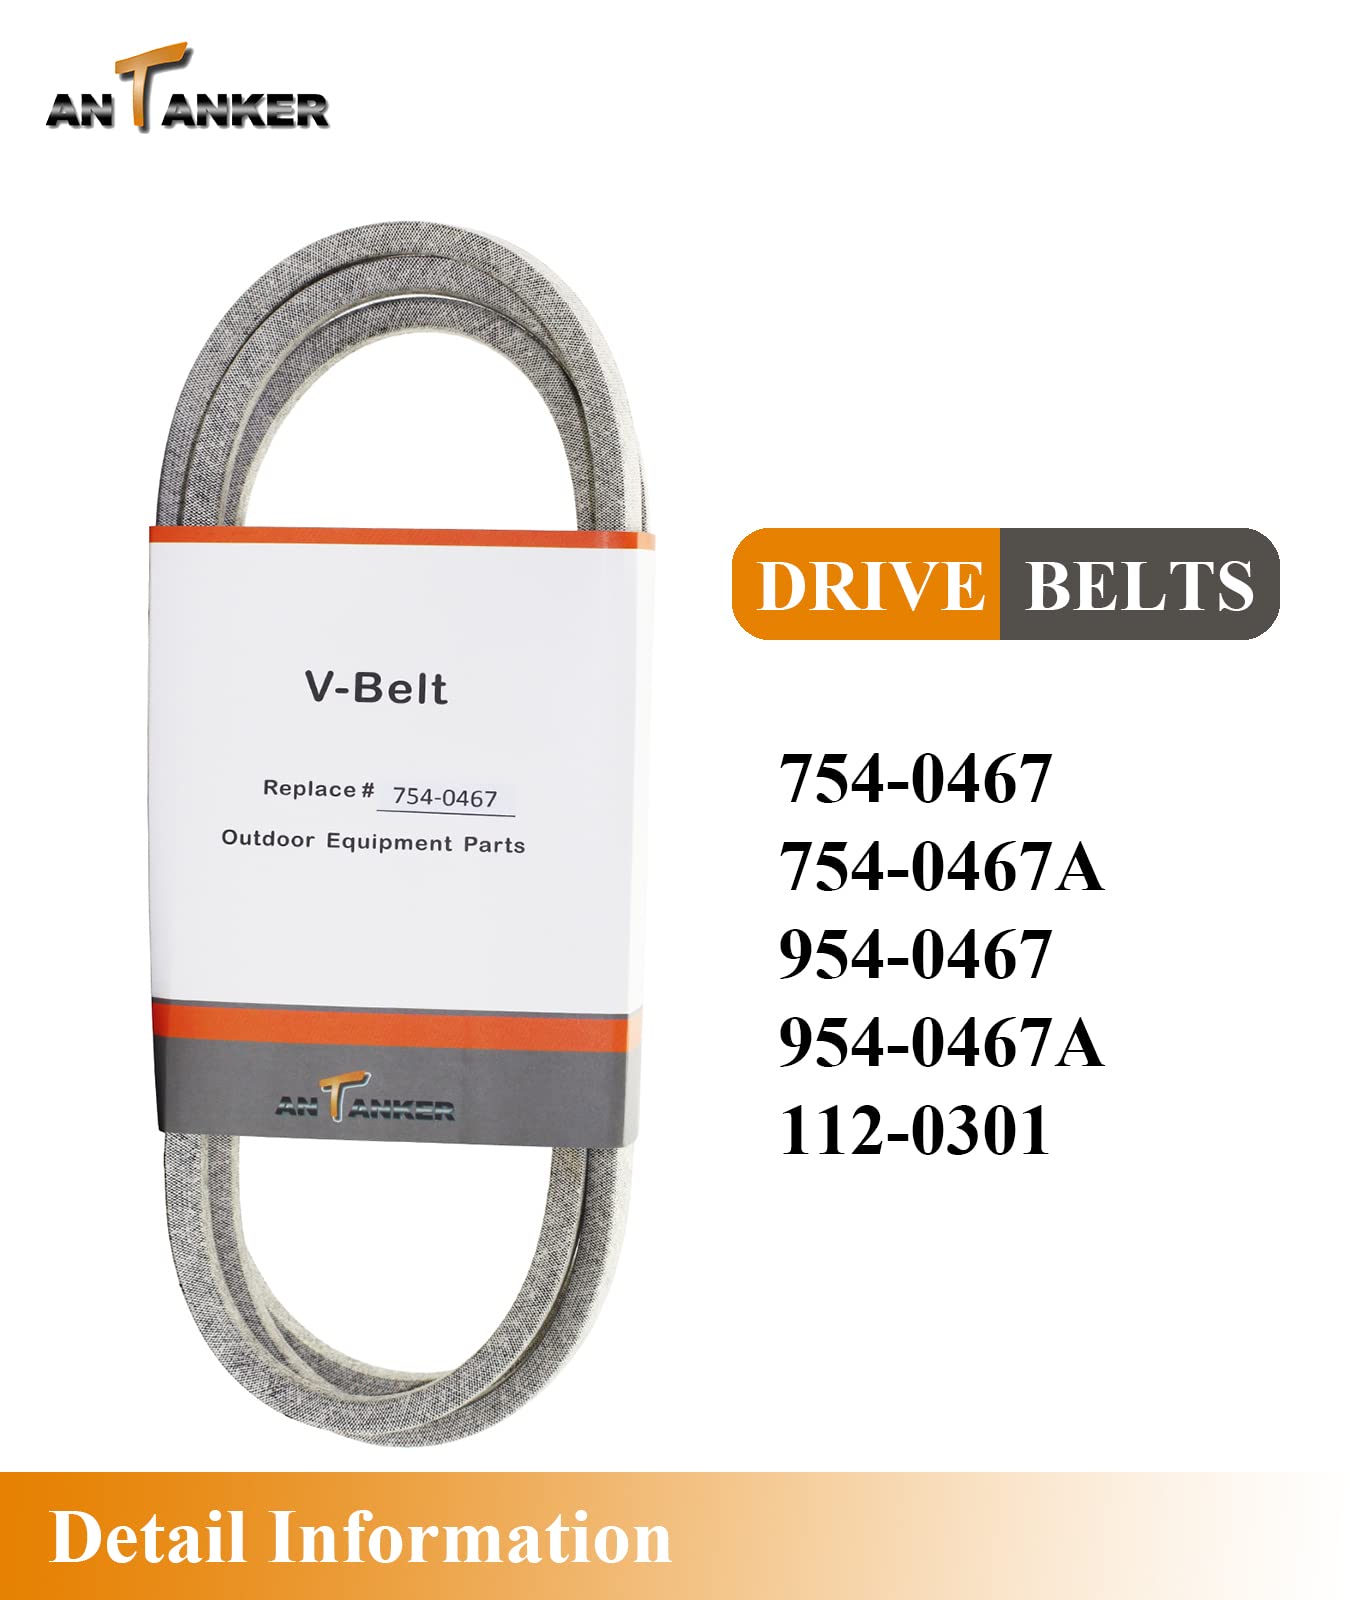 Antanker Drive Belt 954-0467A 754-0467A 11482 Replace for MTD CubCadet for Troy Bilt Lawn Mower Belt